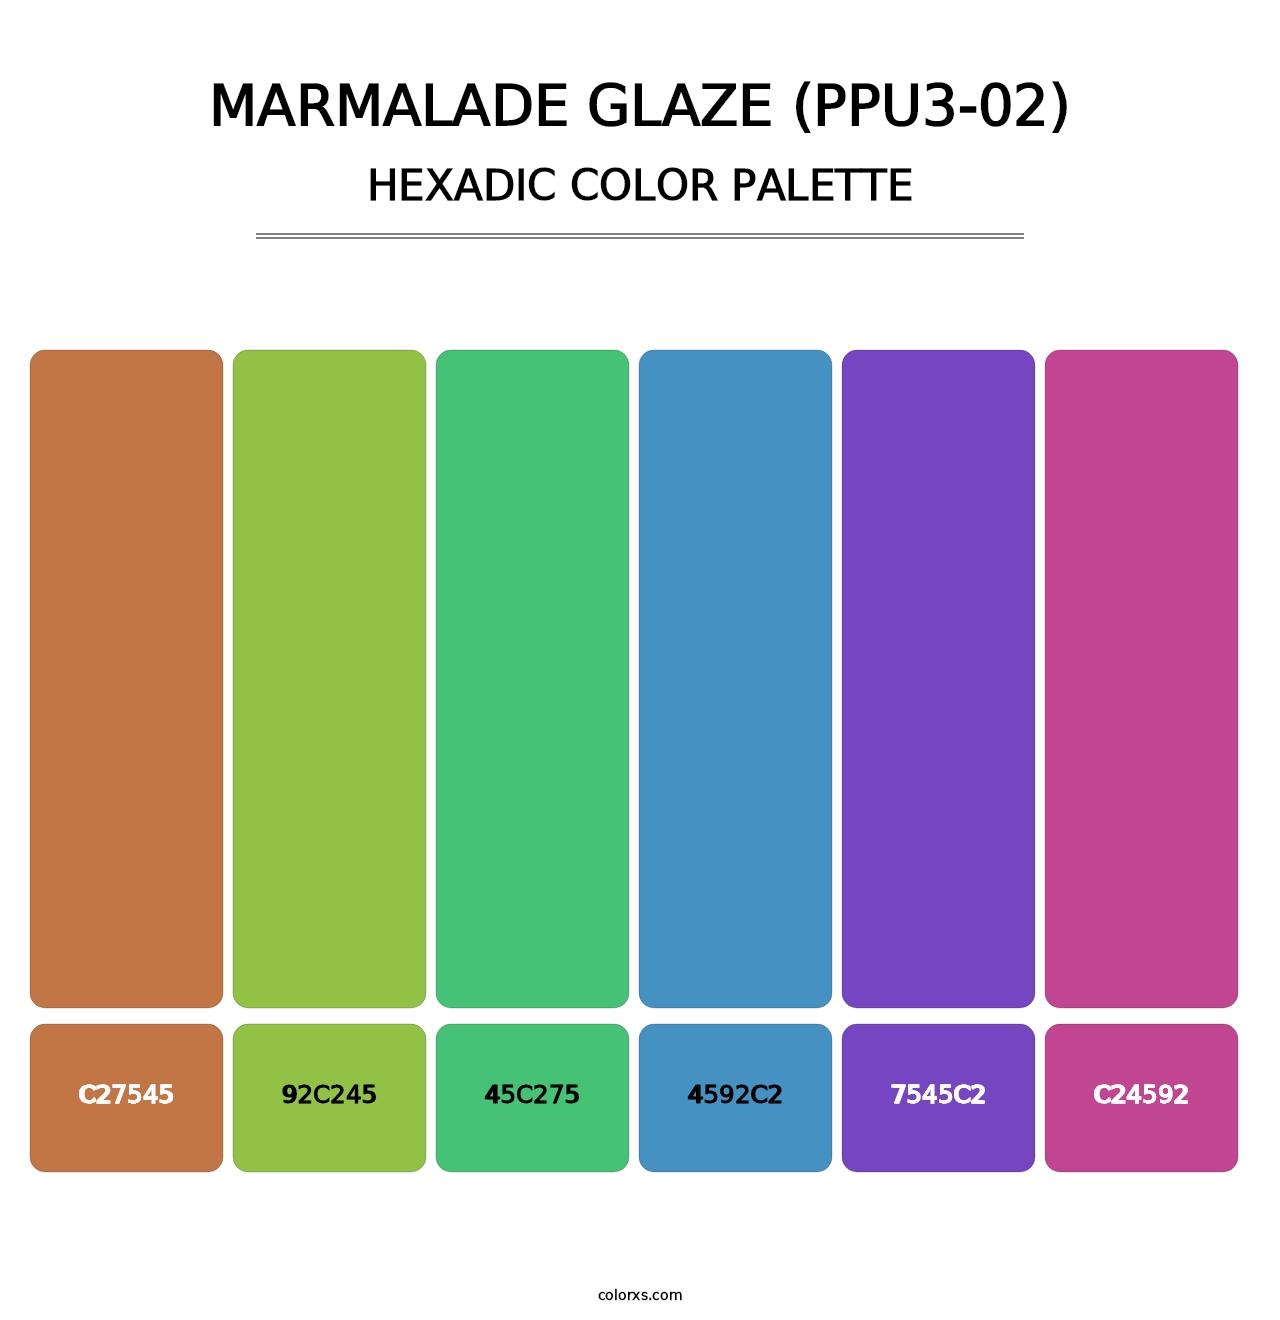 Marmalade Glaze (PPU3-02) - Hexadic Color Palette